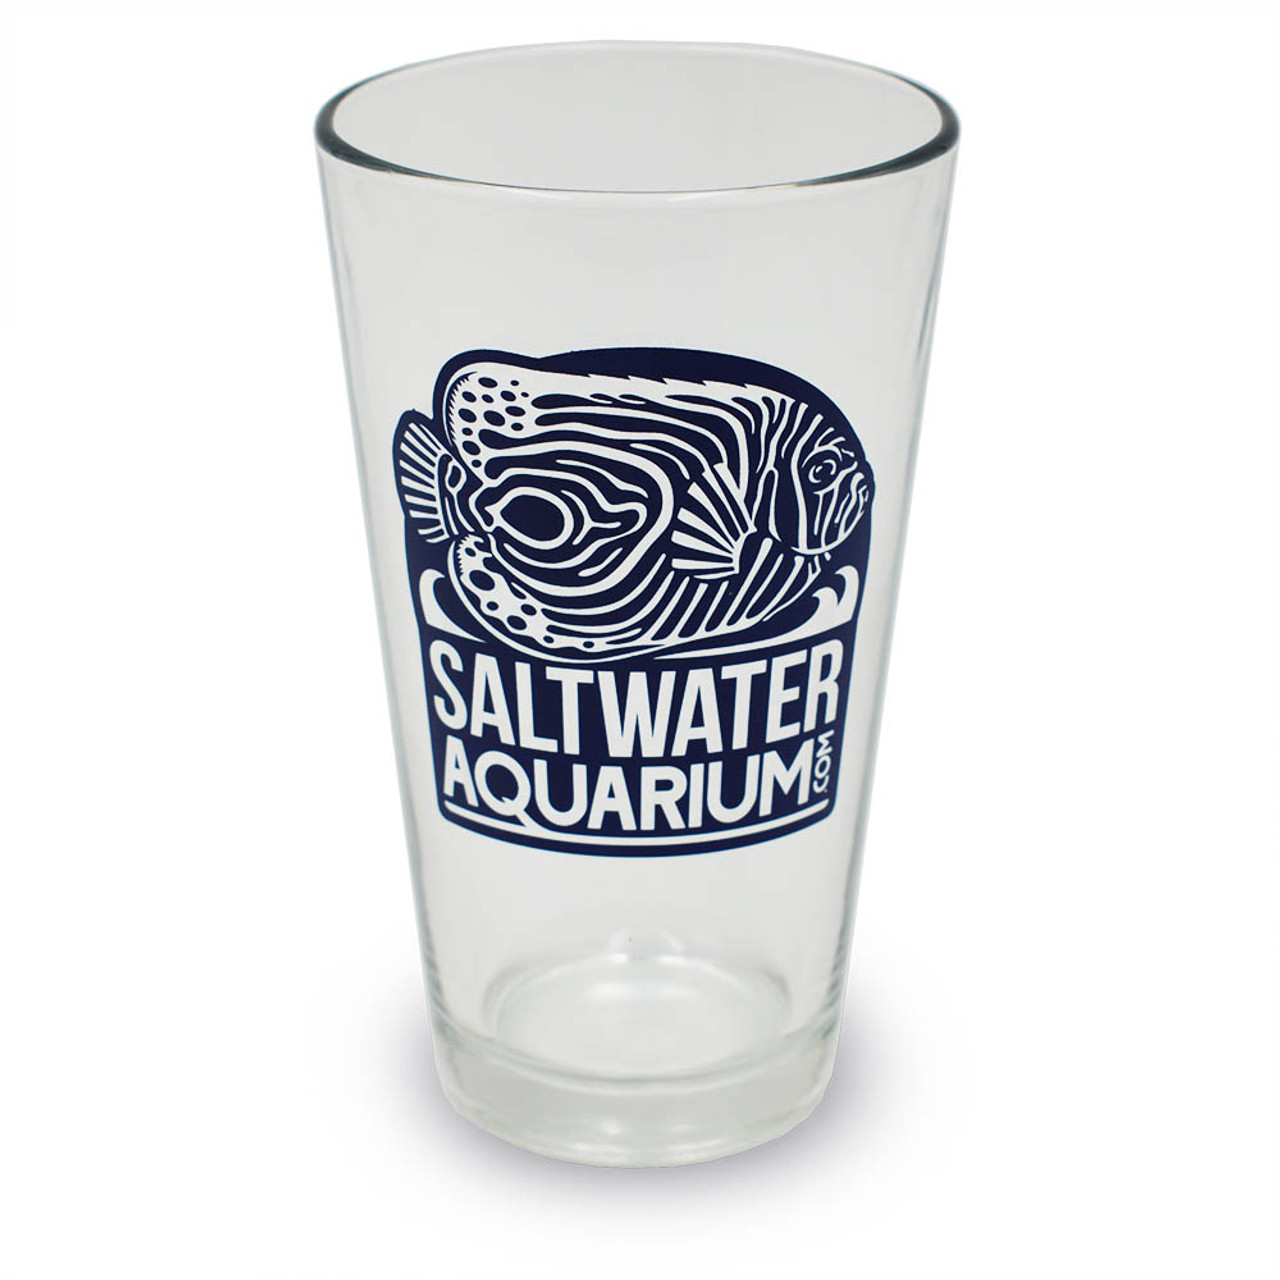 SaltwaterAquarium 16 oz. Beer Pint Glass 